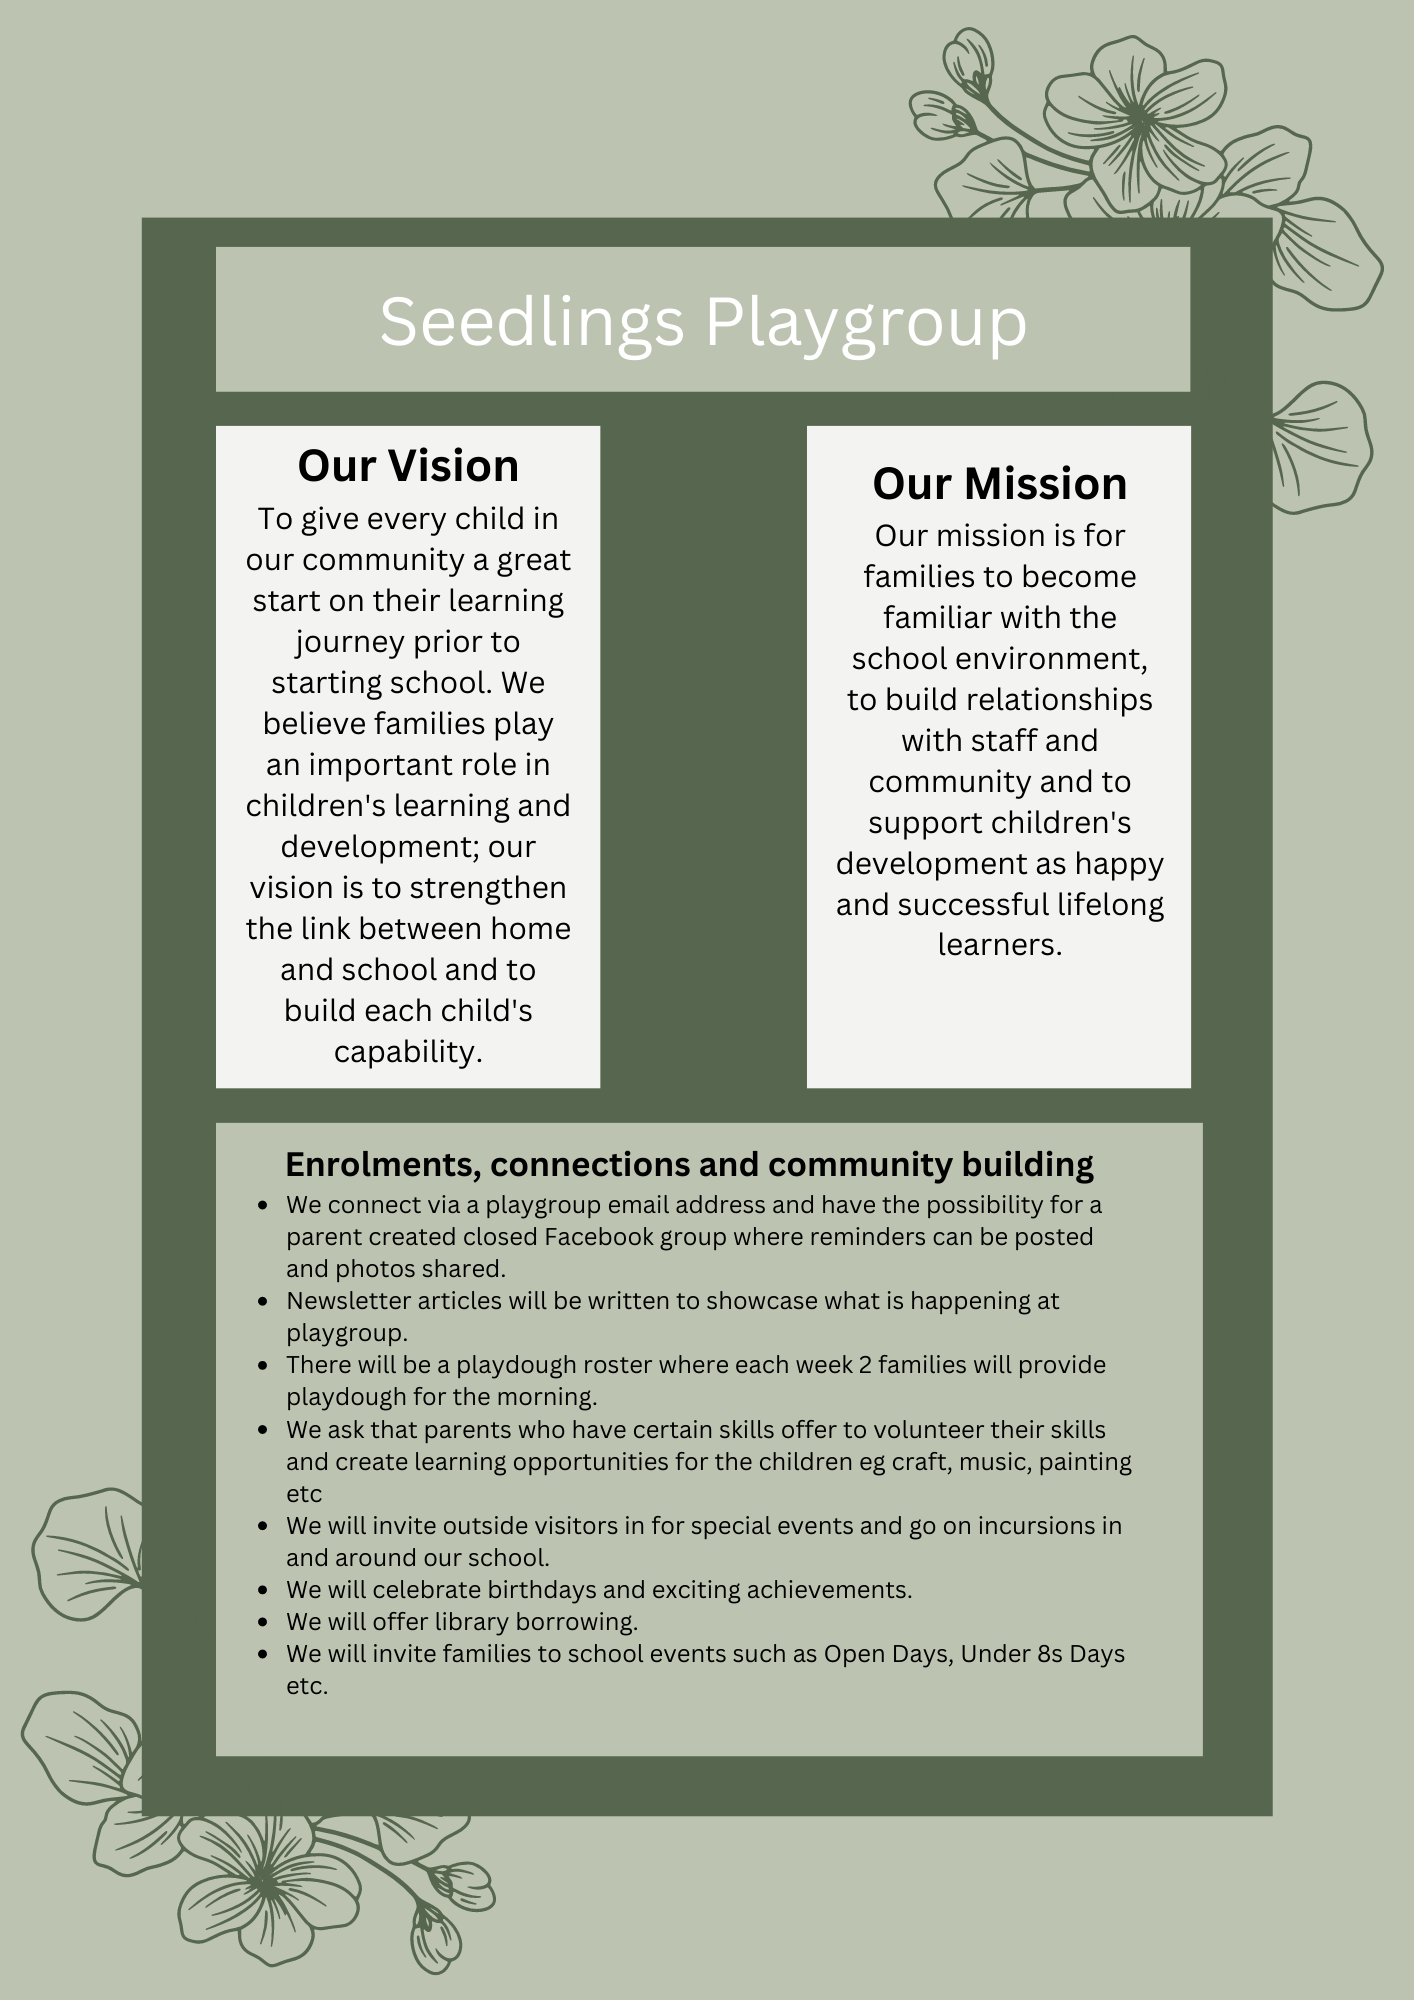 Seedlings Playgroup Vision 